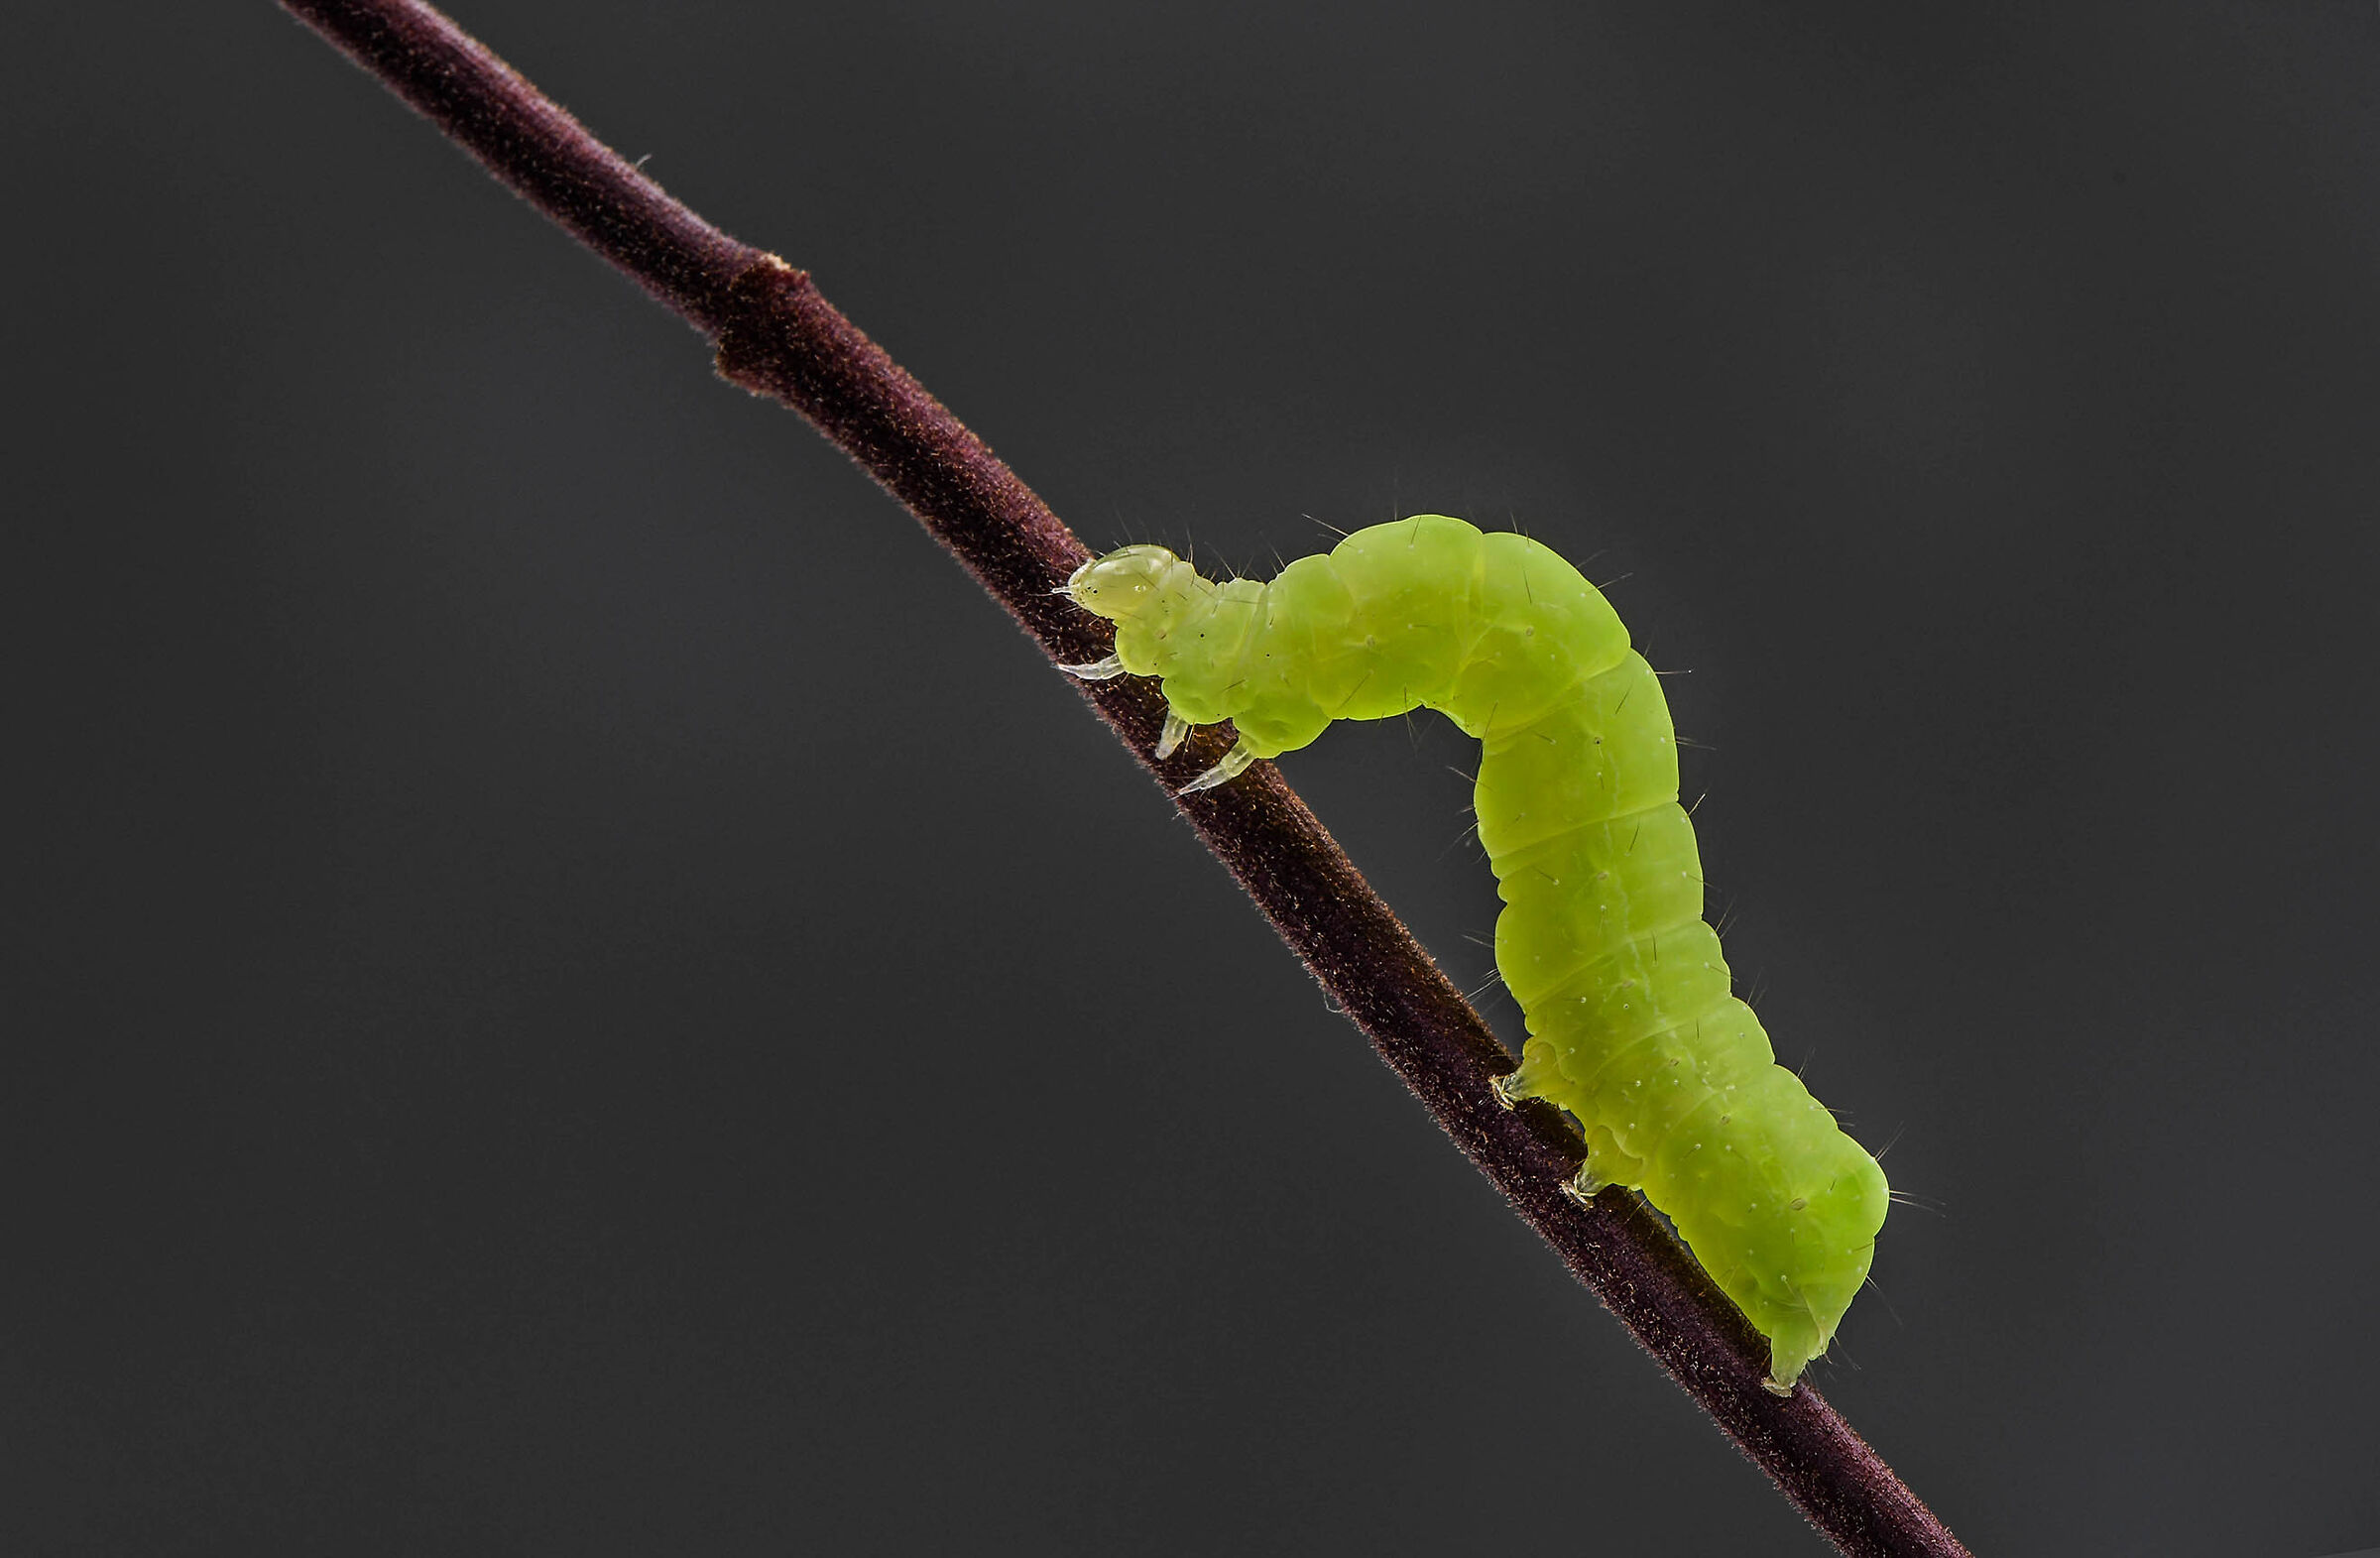 Caterpillar eats leaves....